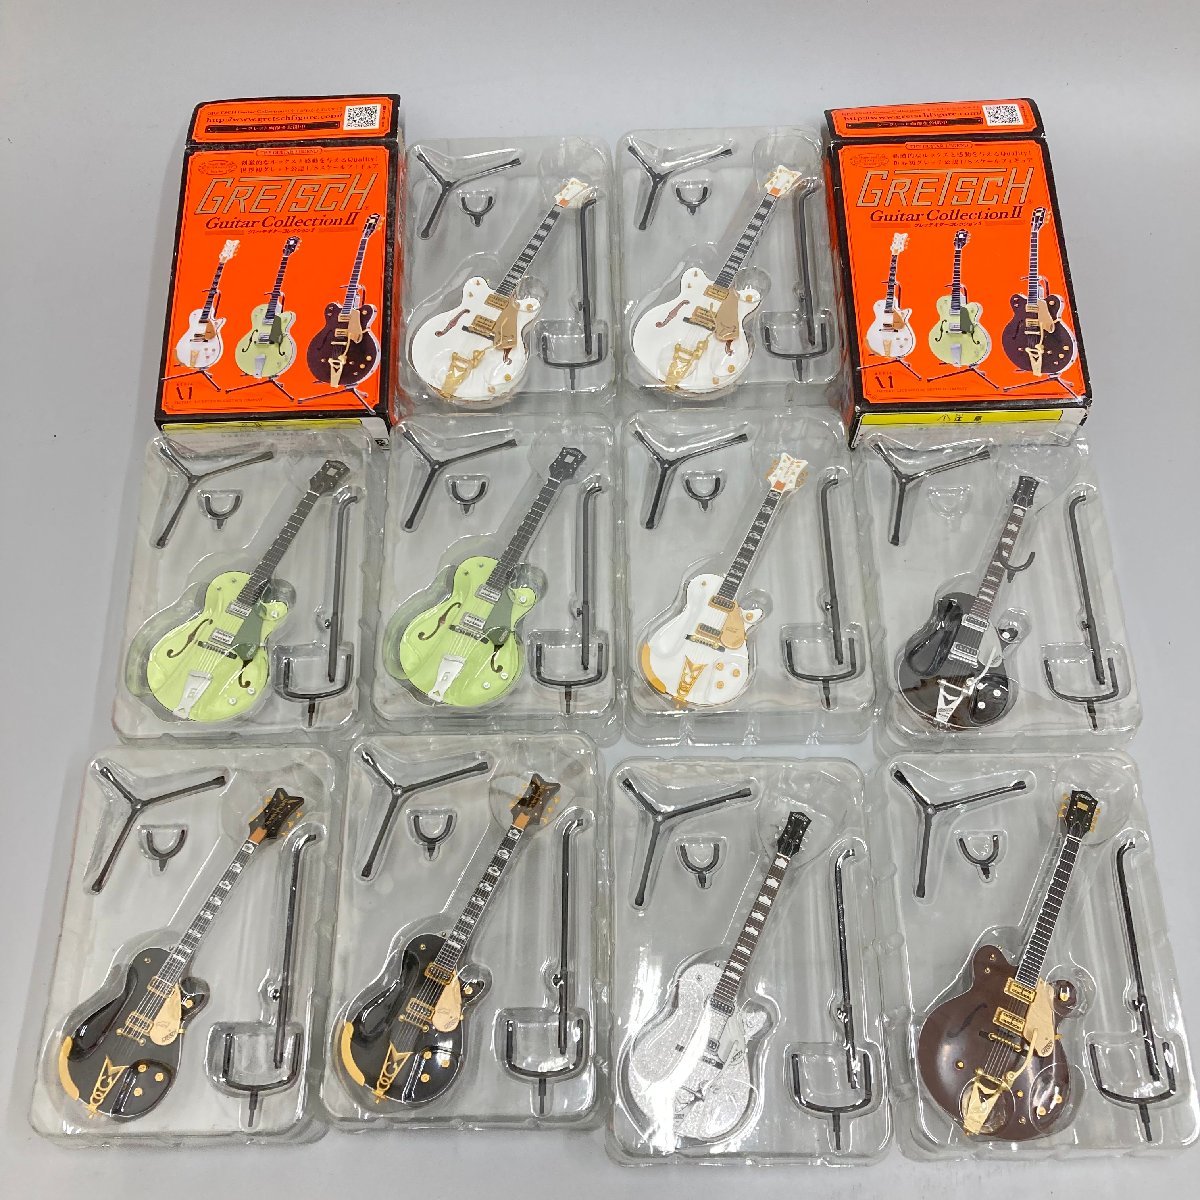 GRETSCH ギターコレクションⅠ＆Ⅱ 全16種類 完全コンプリート-